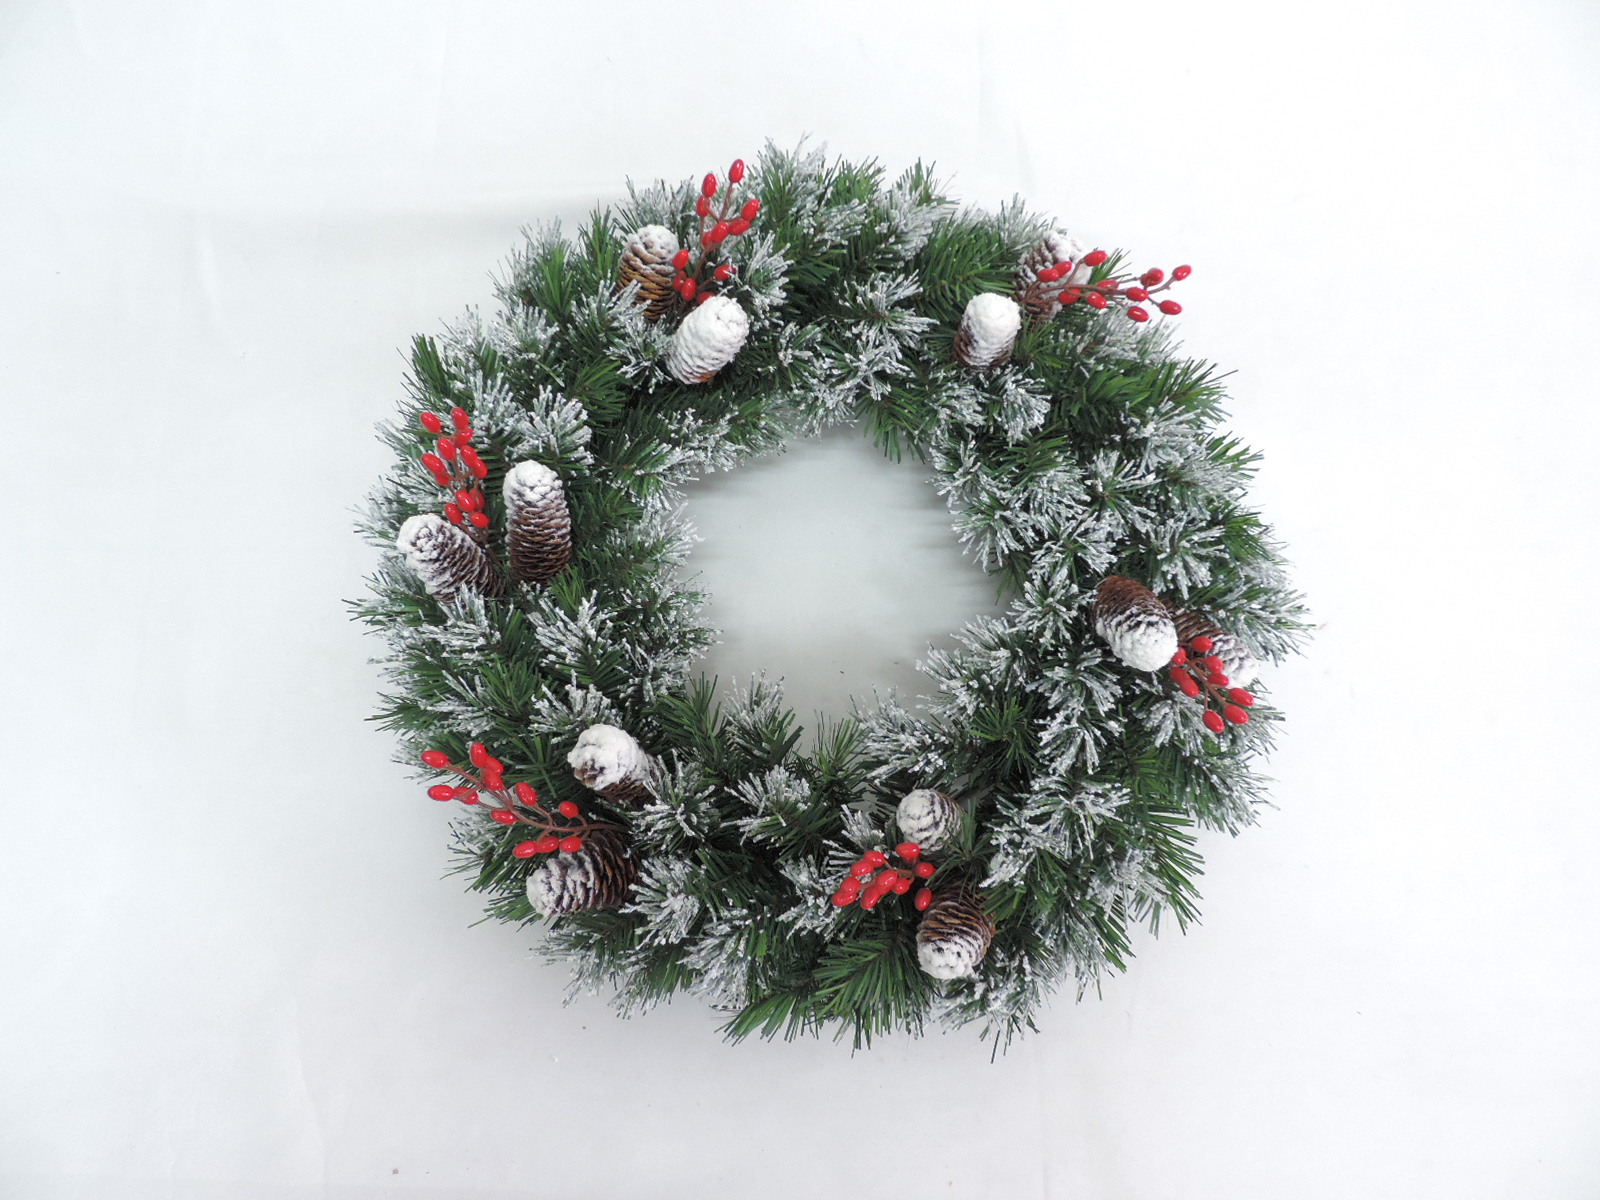 Umsuka nobuqambi of Christmas wreath